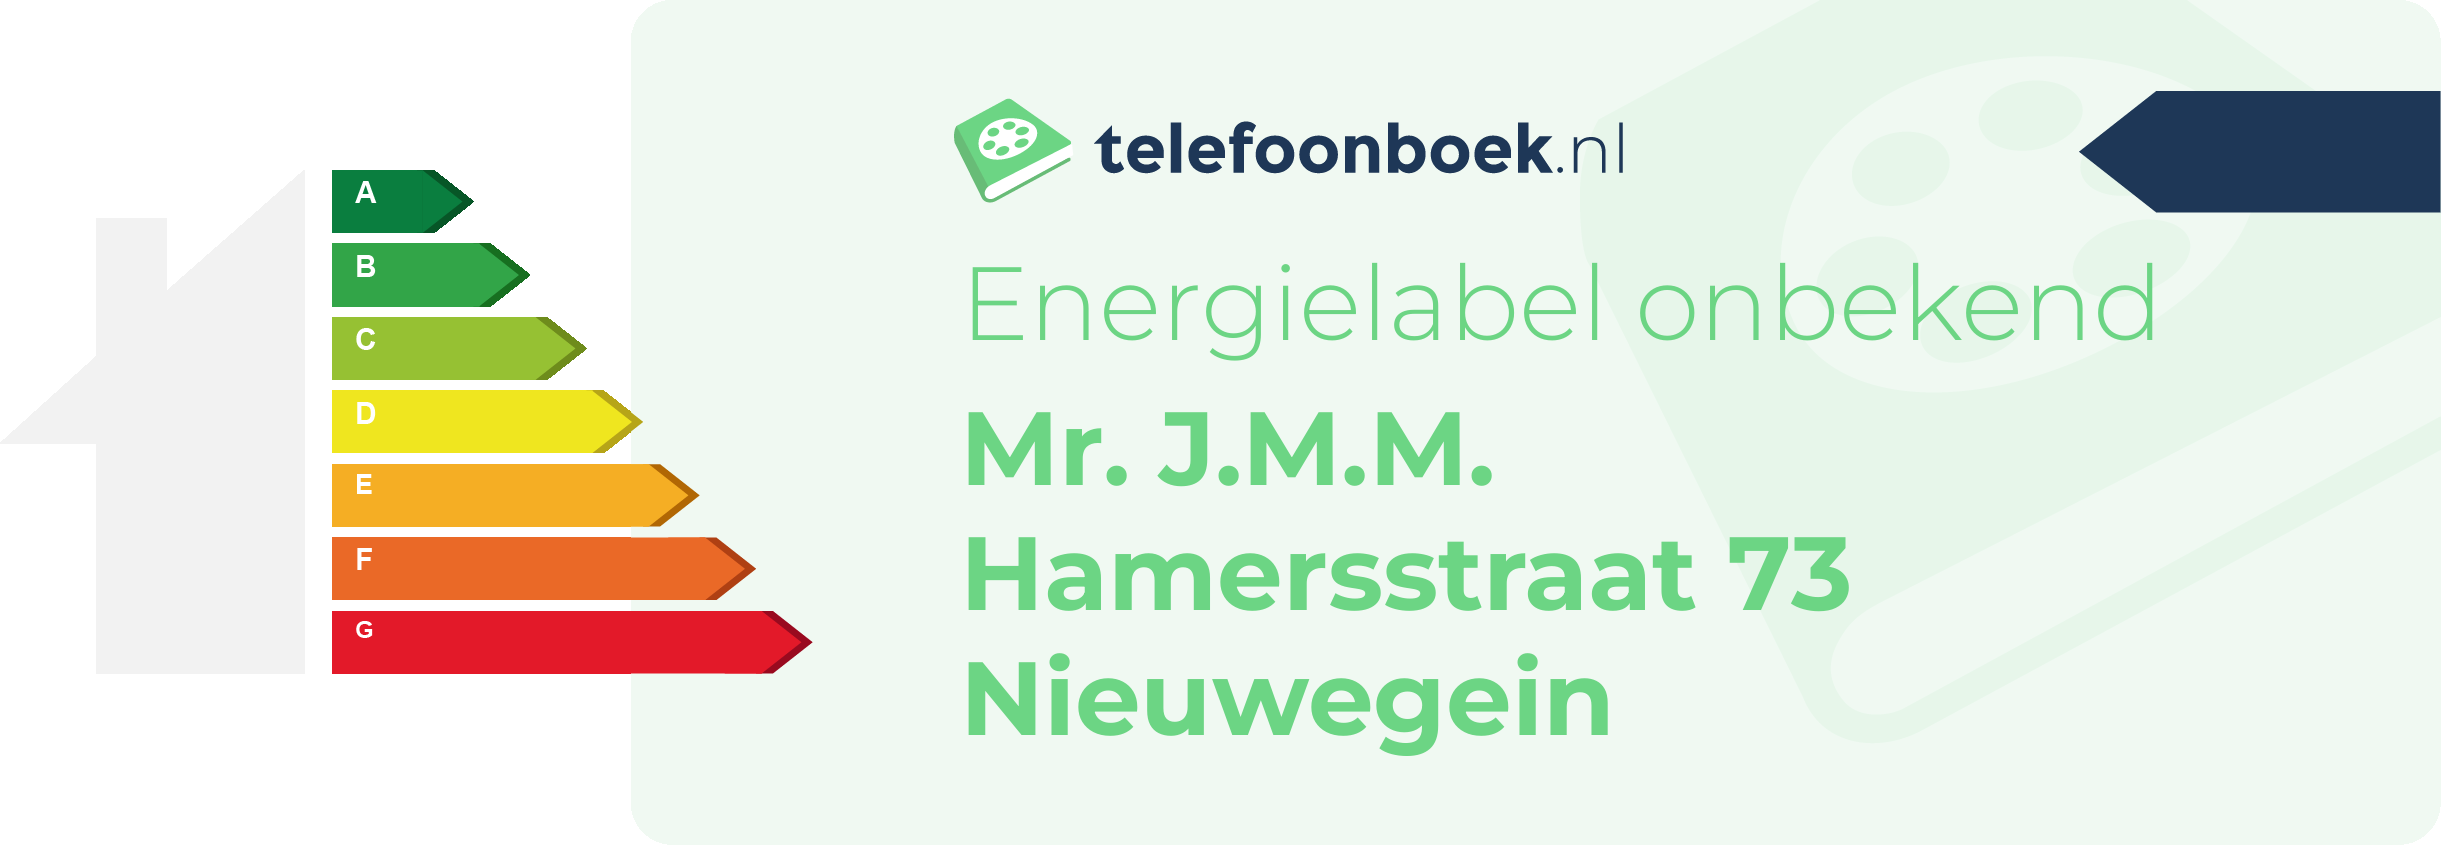 Energielabel Mr. J.M.M. Hamersstraat 73 Nieuwegein